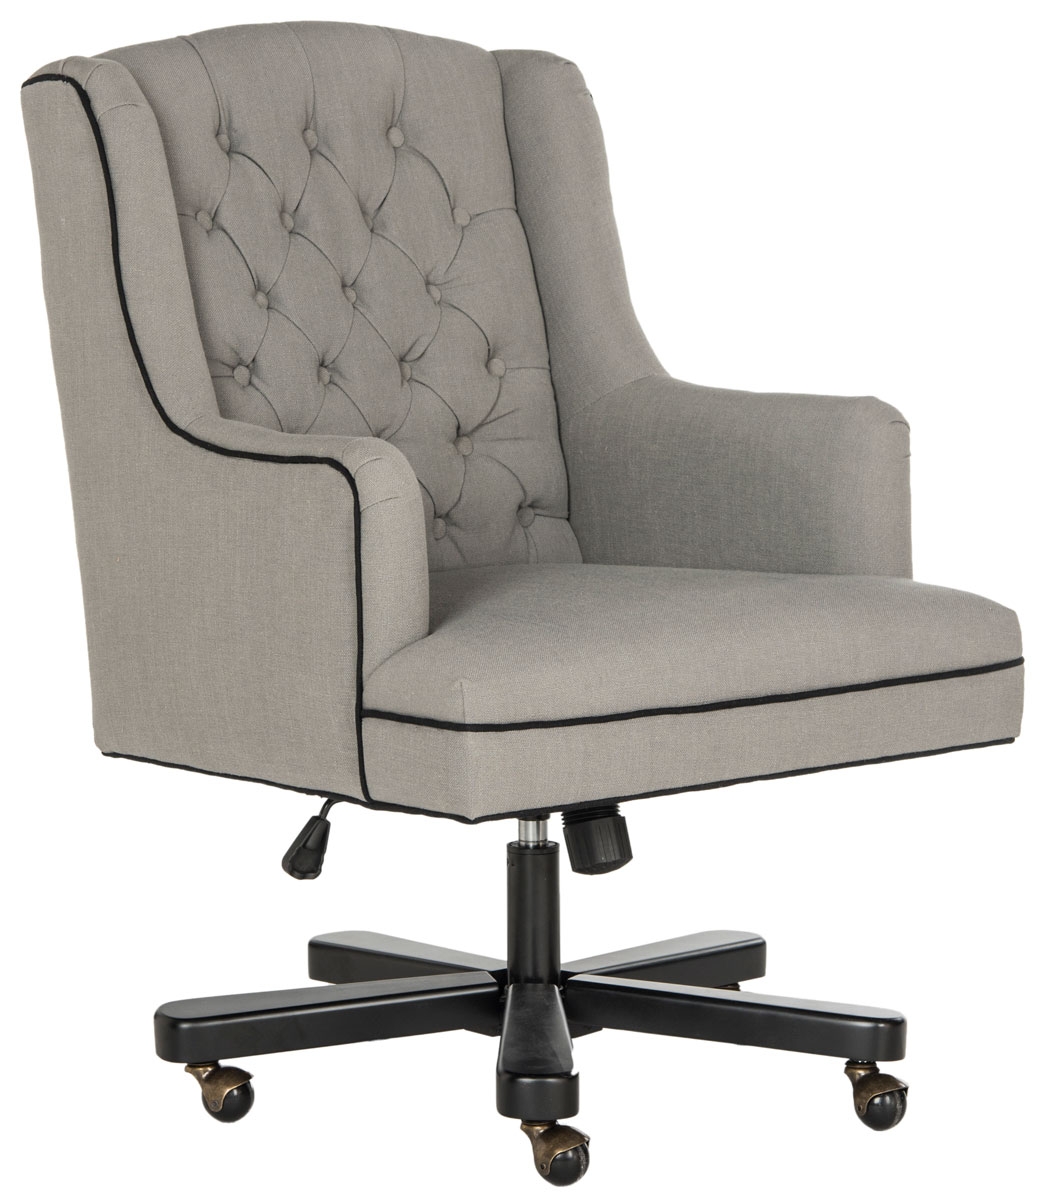 Nichols Office Chair - Granite/Black - Arlo Home - Image 1